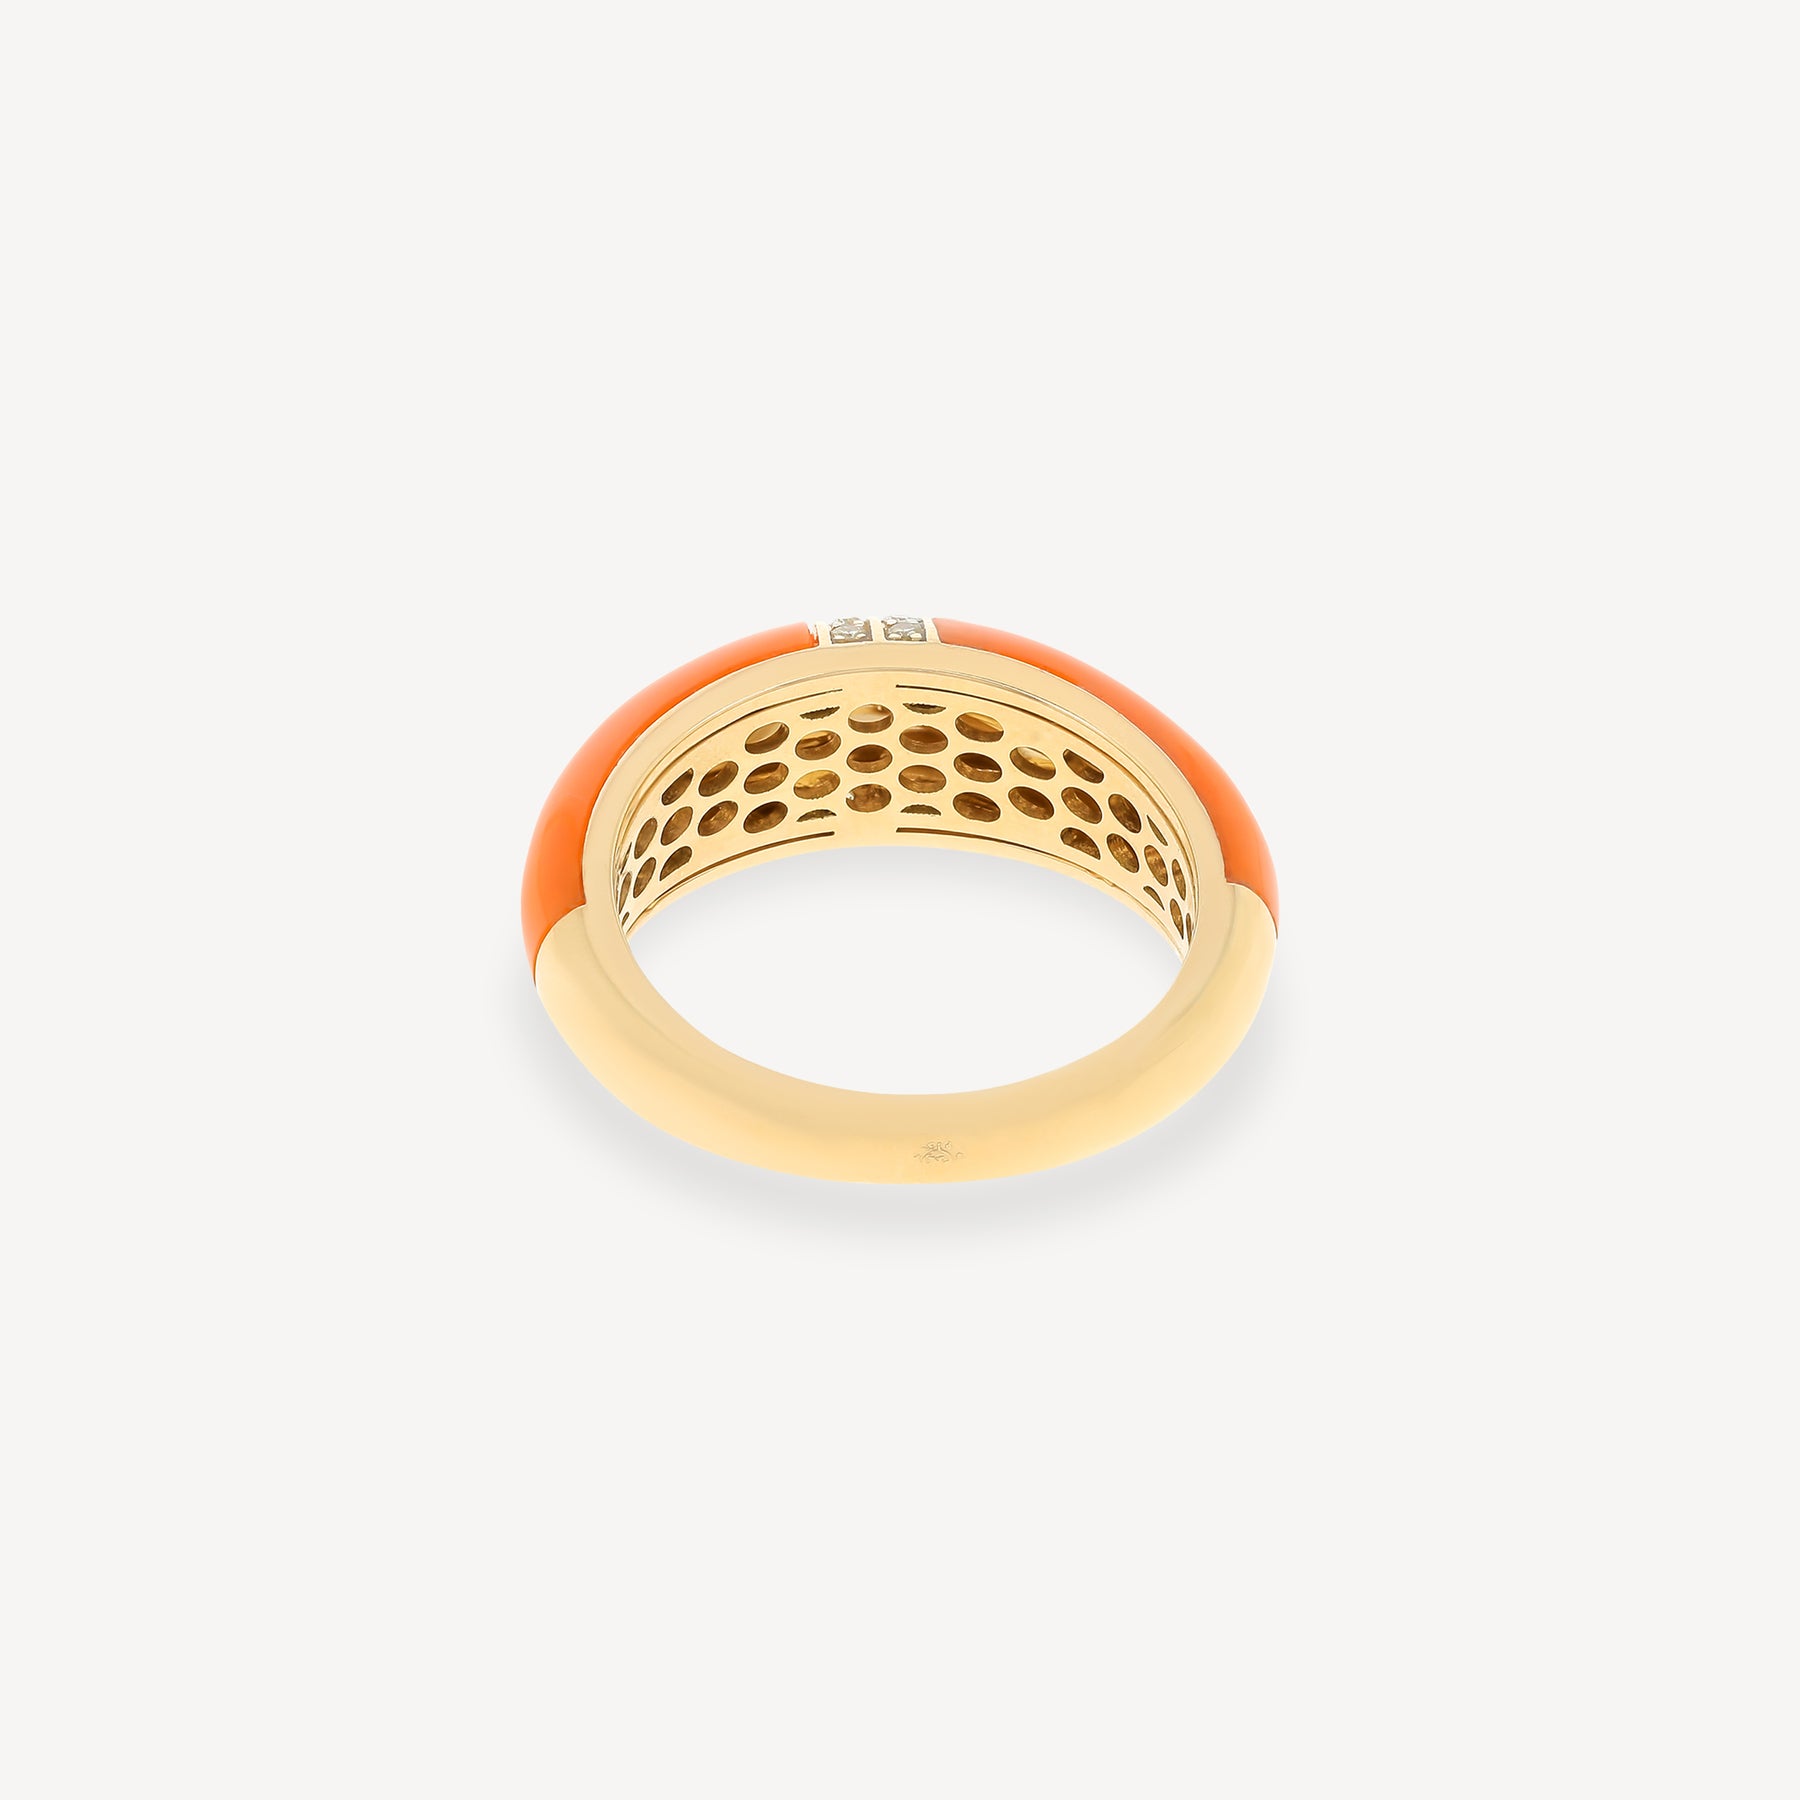 Modernity Orange Ring